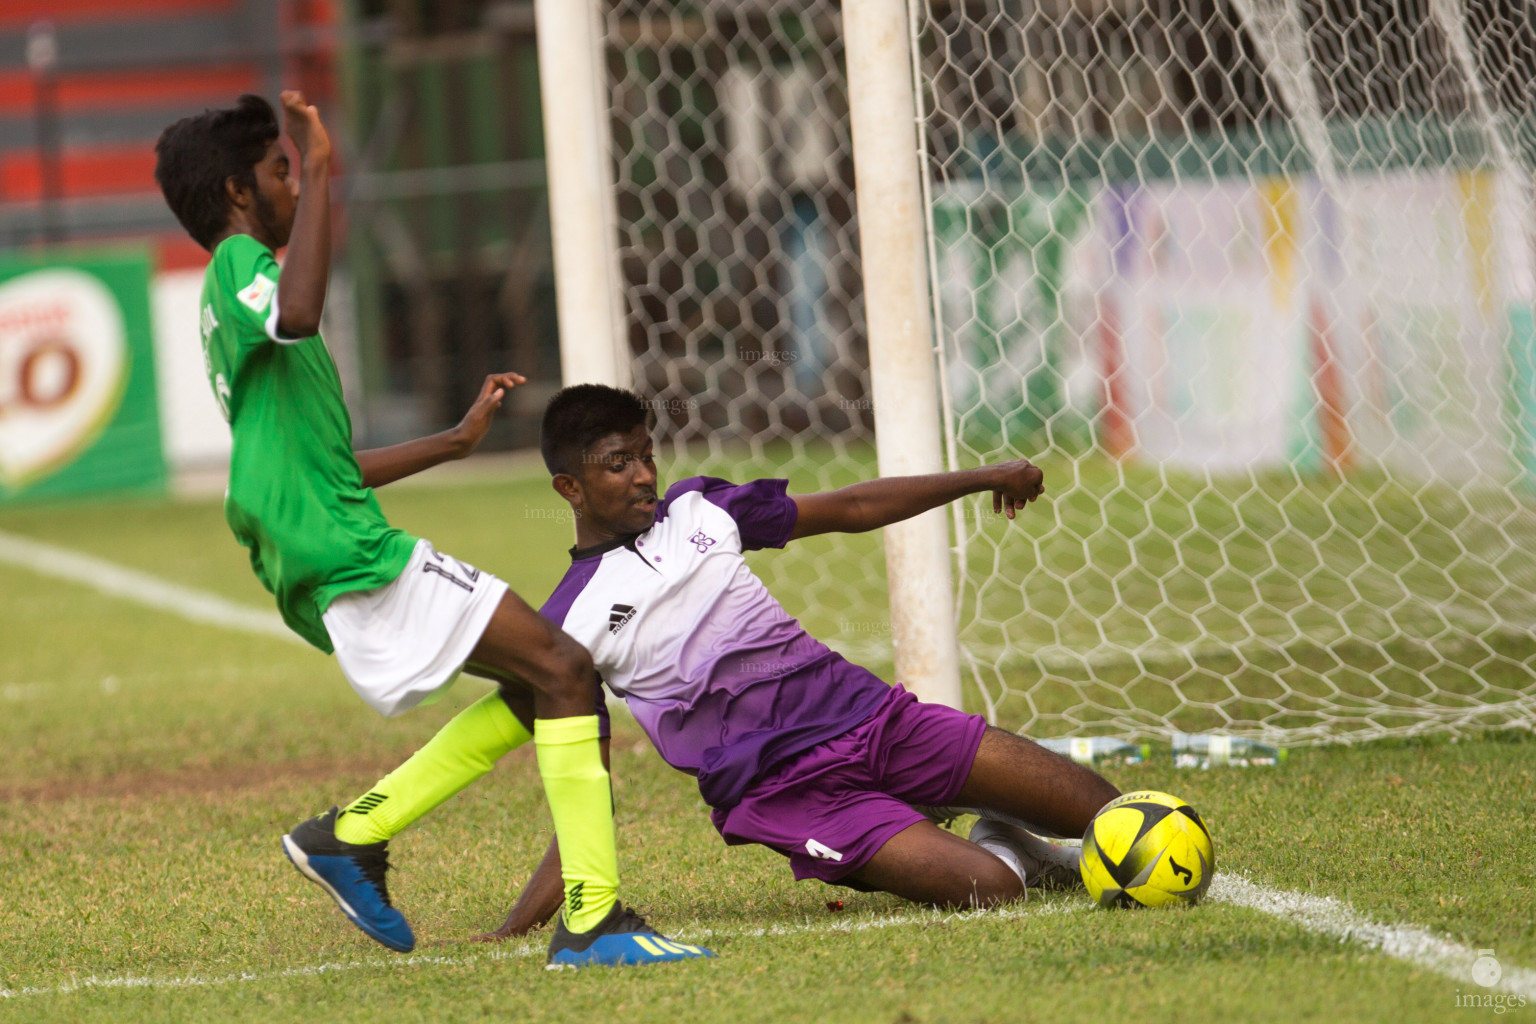 Gulhee School vs Hiriya School in Mamen Inter-School Football Tournament 2019 (U15) on 3rd March 2019, Sunday in Male' Maldives (Images.mv Photo: Suadh Abdul Sattar)